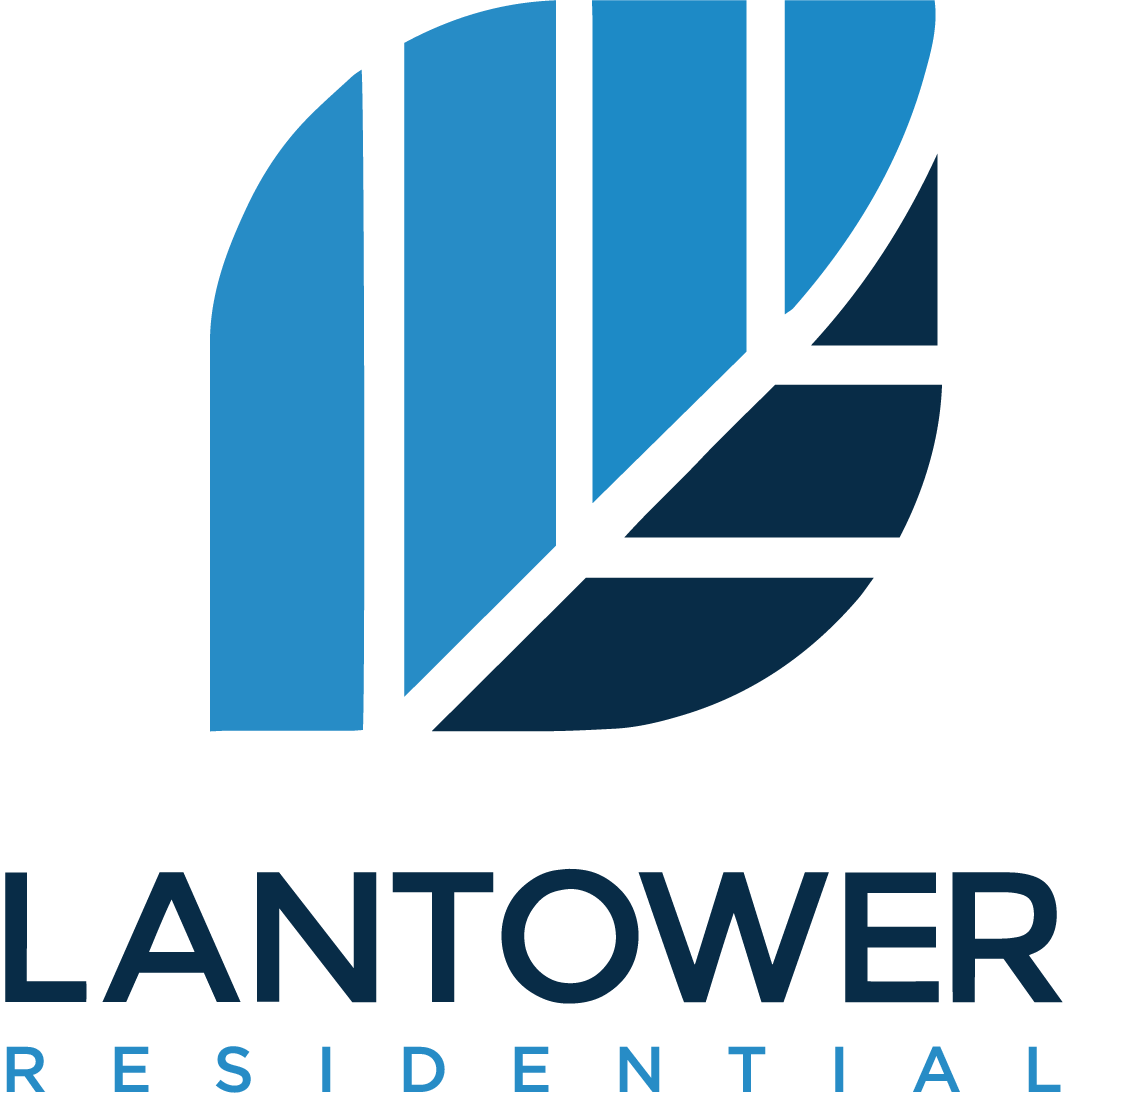 Lantower Residential